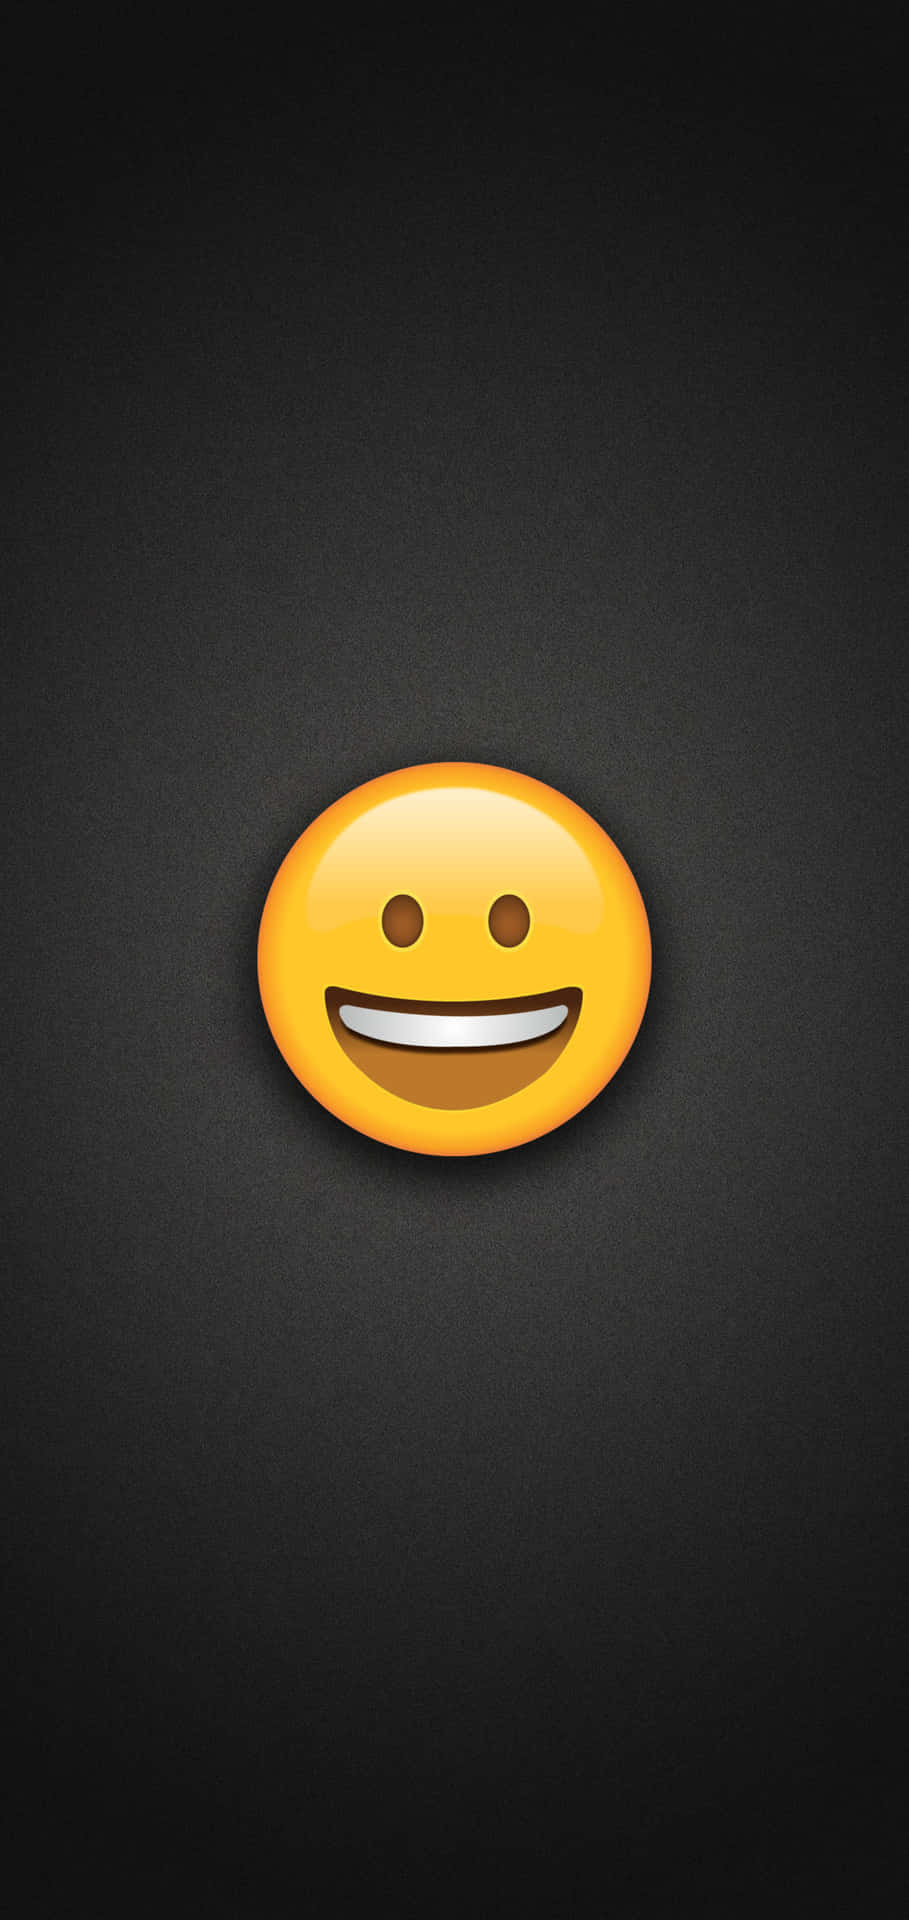 Classic Happy Smile Emoji Expressing Joy